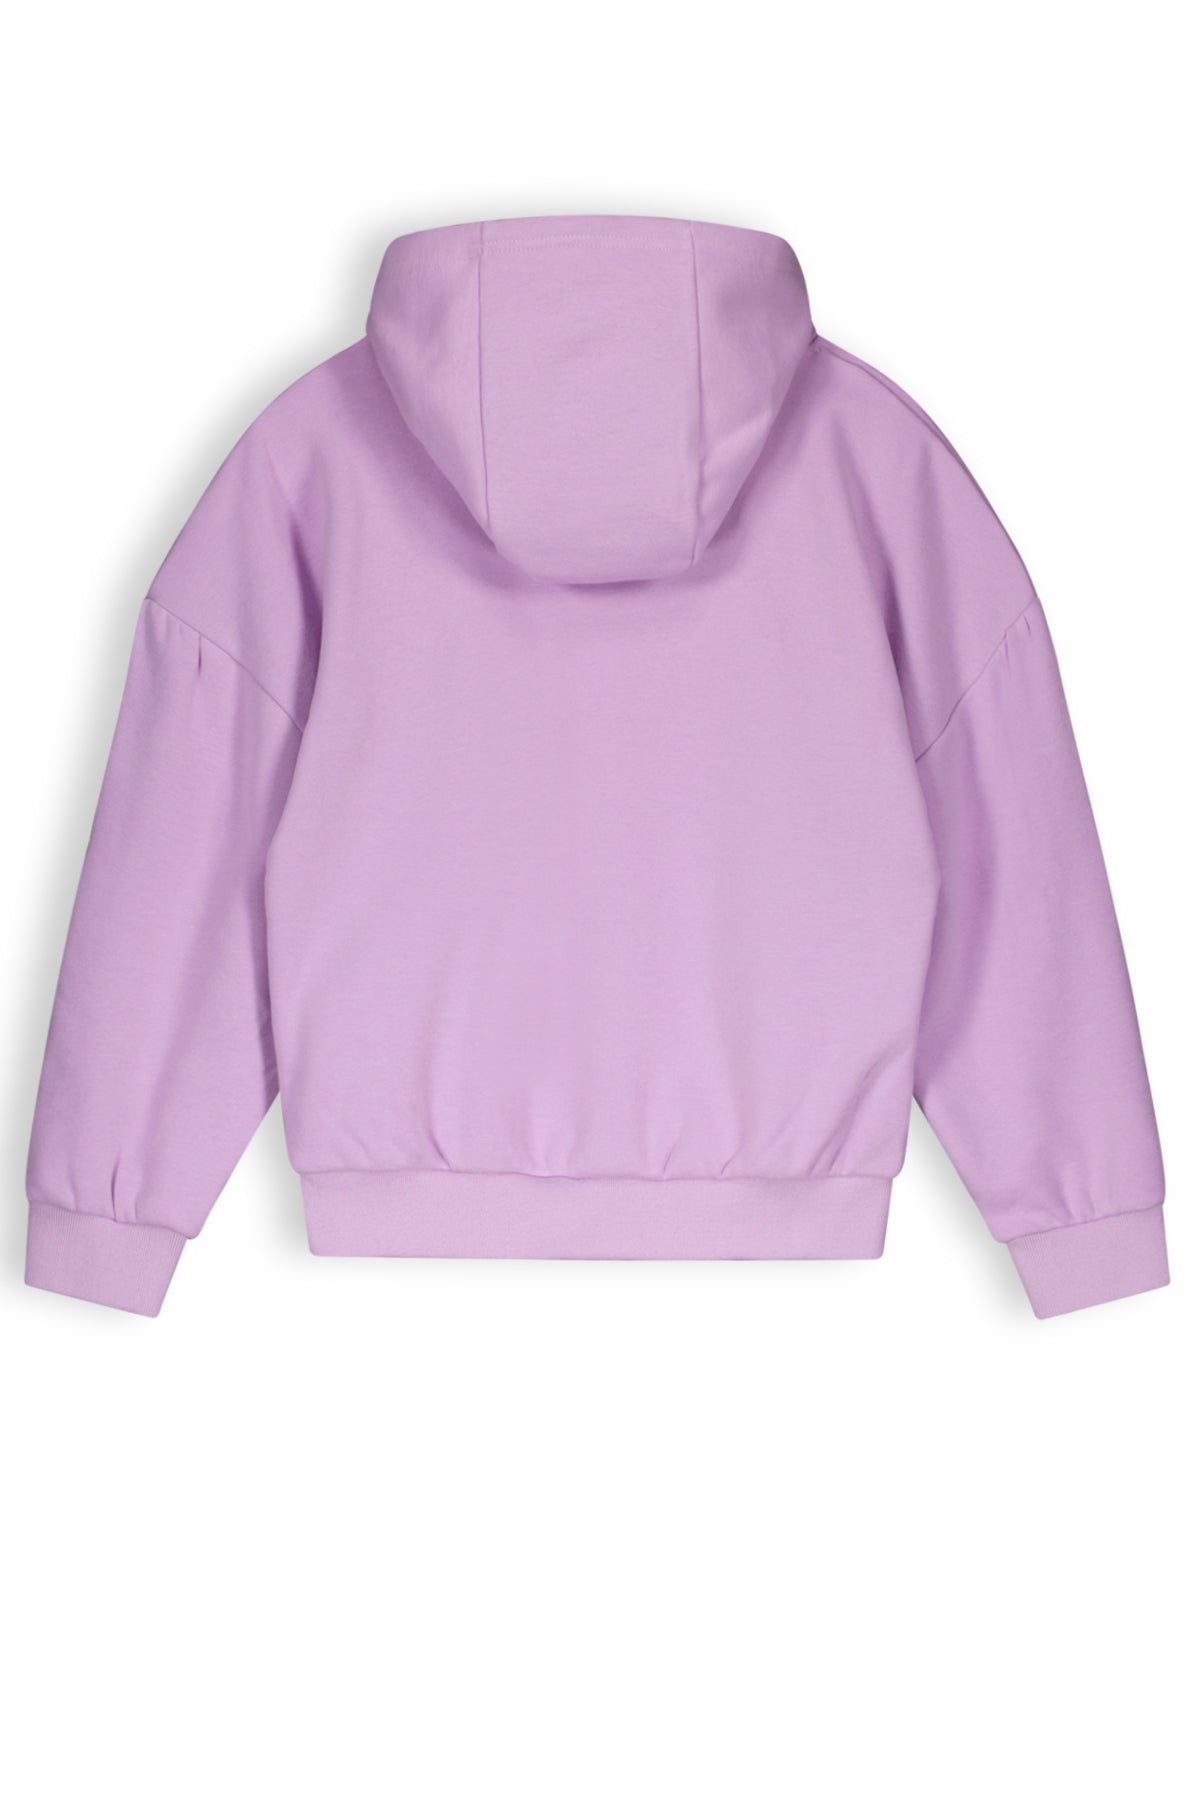 Meisjes King soft girls hooded sweater van NoBell in de kleur Lupine Lilac in maat 170-176.